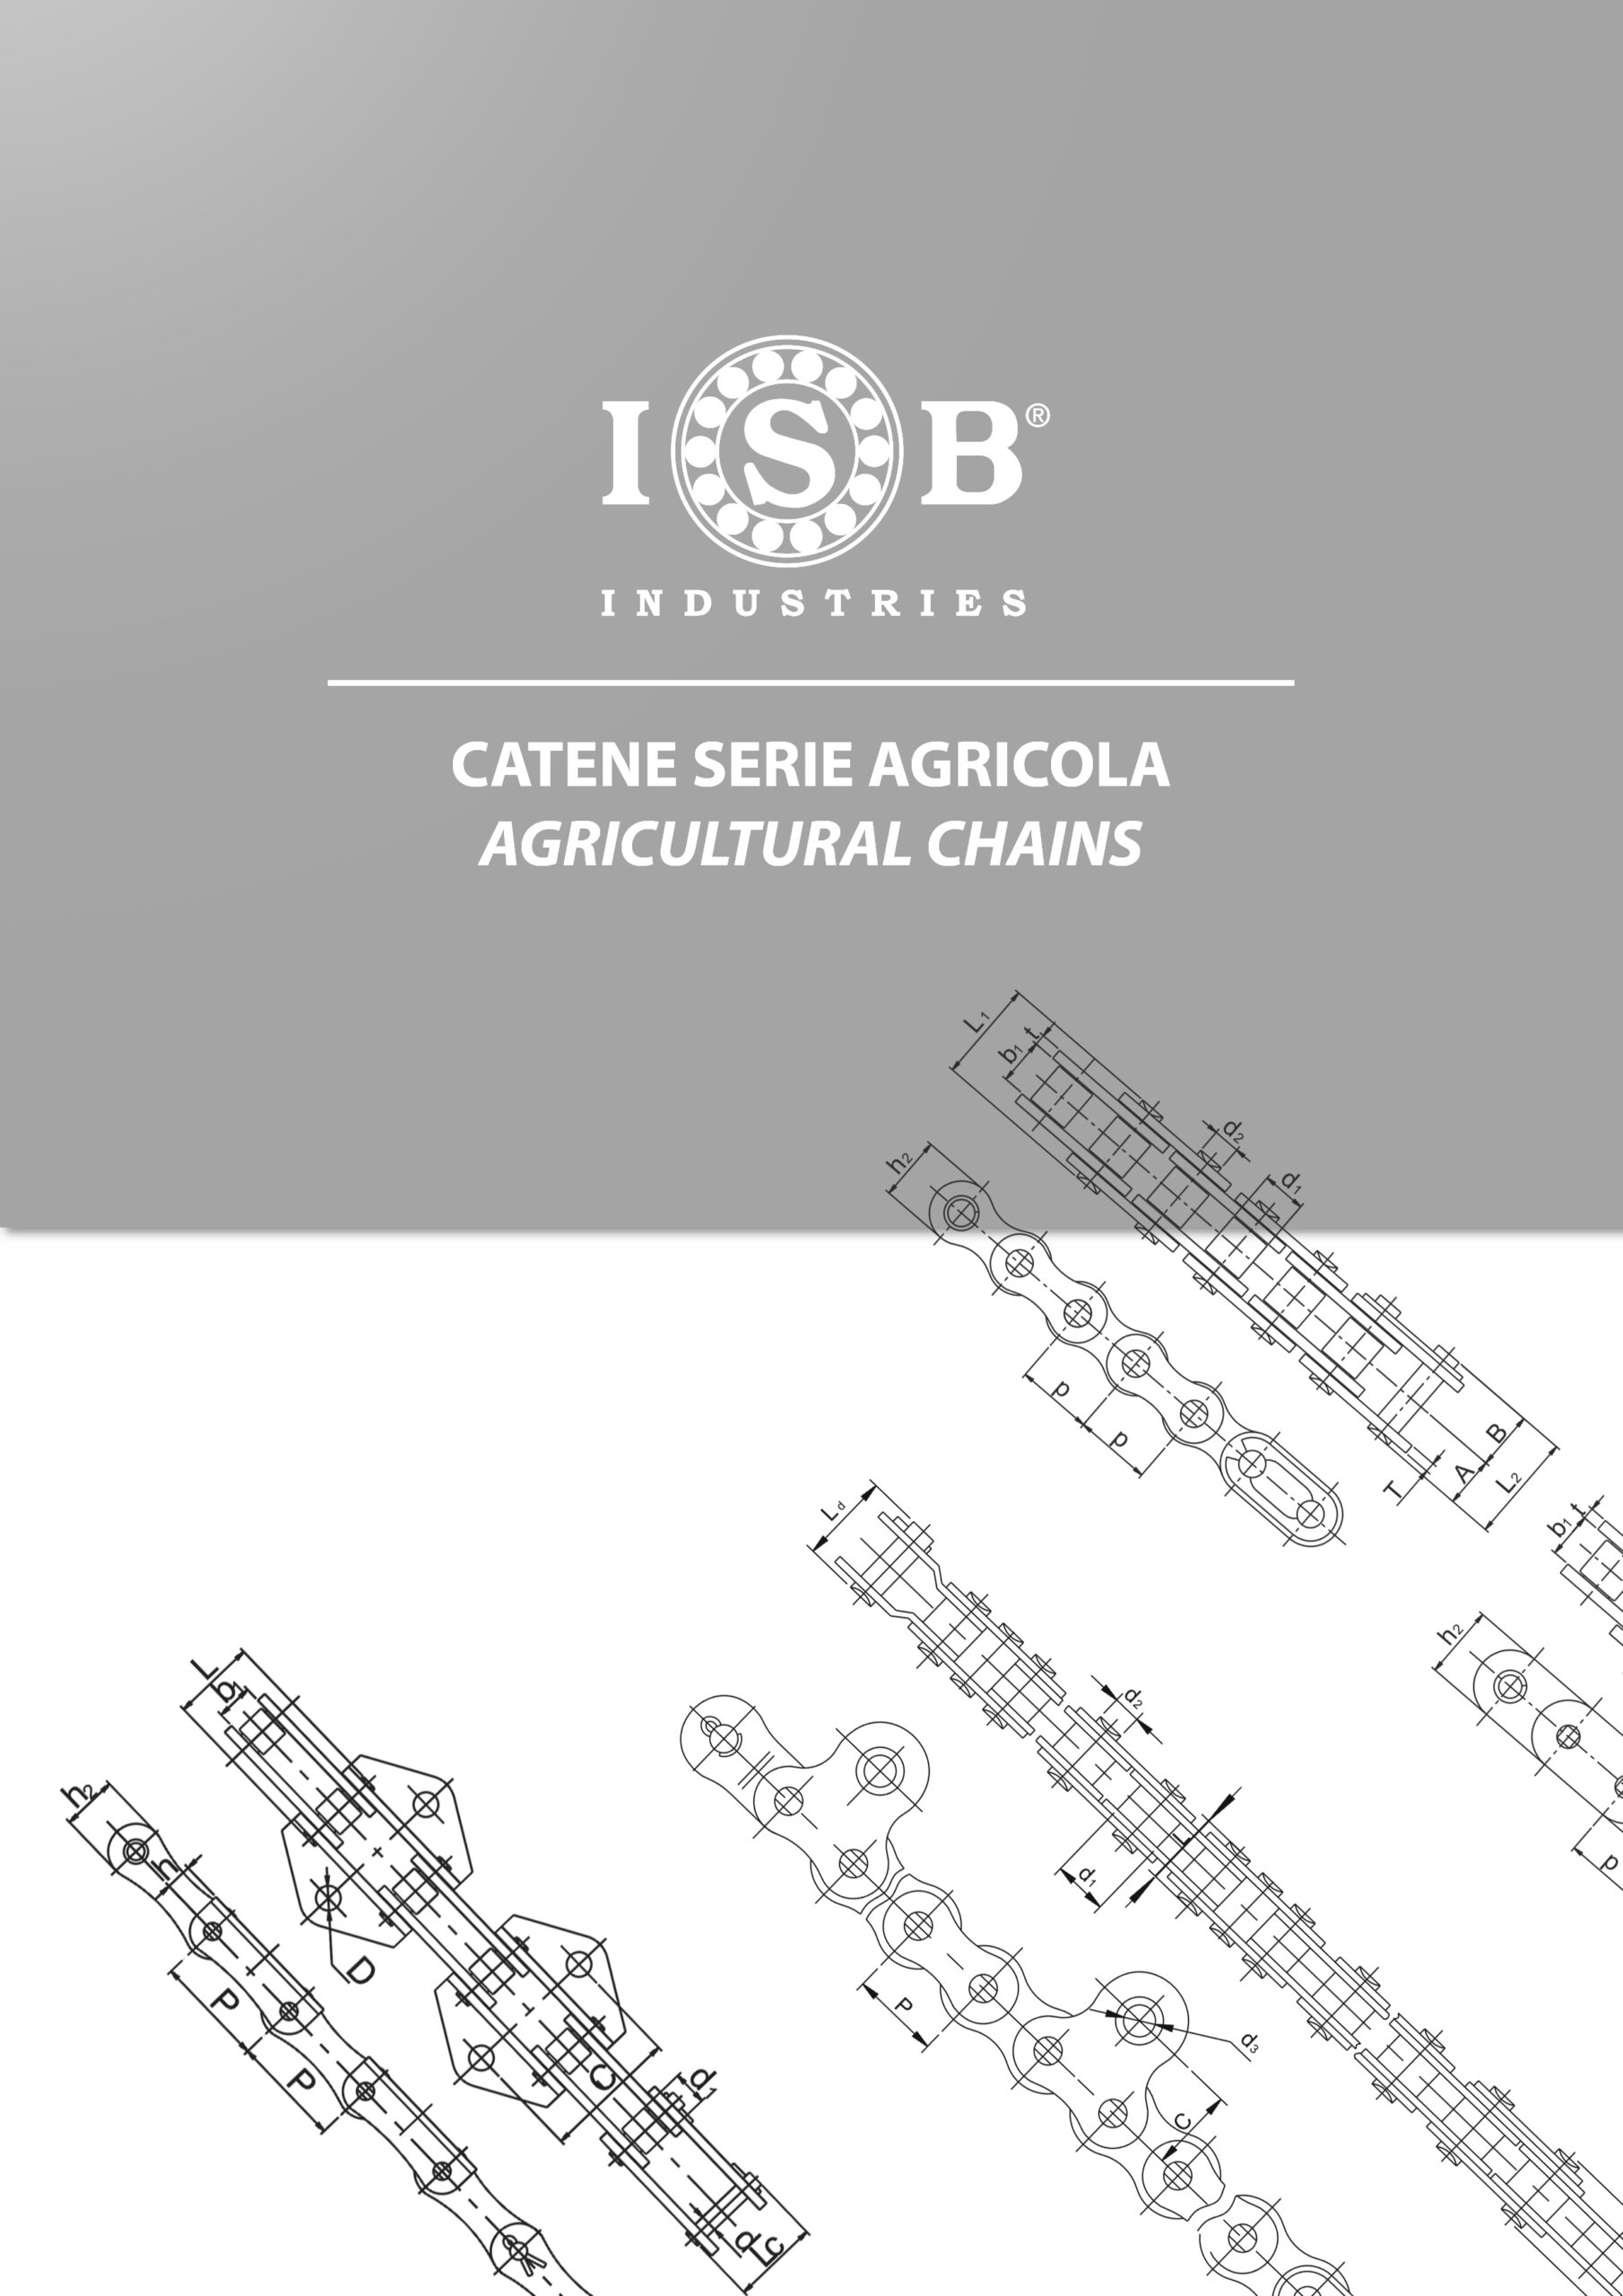 Cadena-serie-agricola-ISB-scaled.jpg